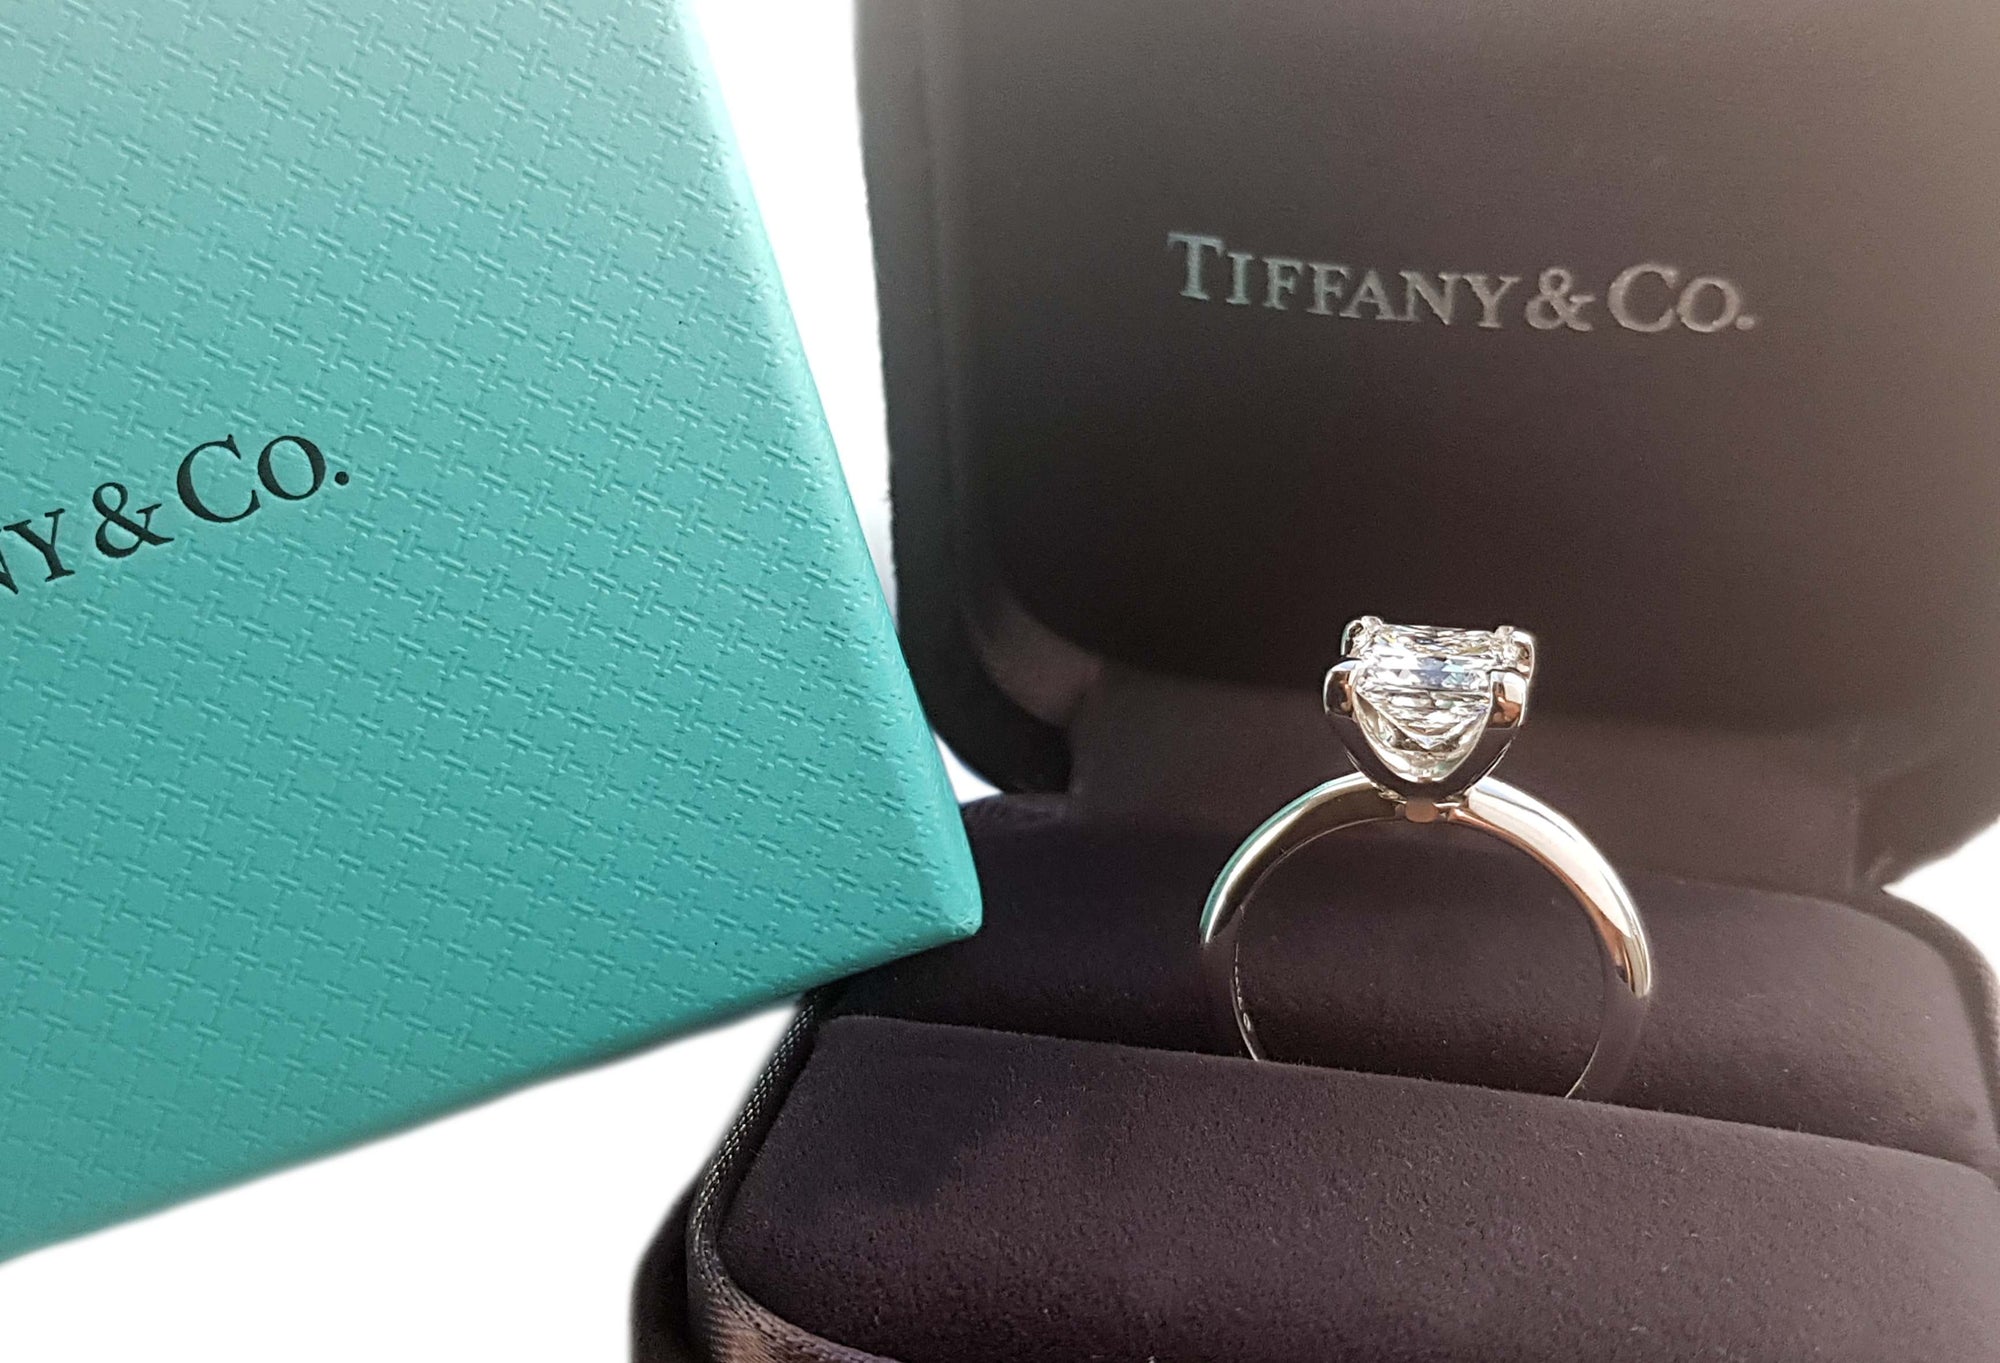 Tiffany & Co. 2.05ct G/VS1 Princess Cut Diamond Engagement Ring in Tiffany Box